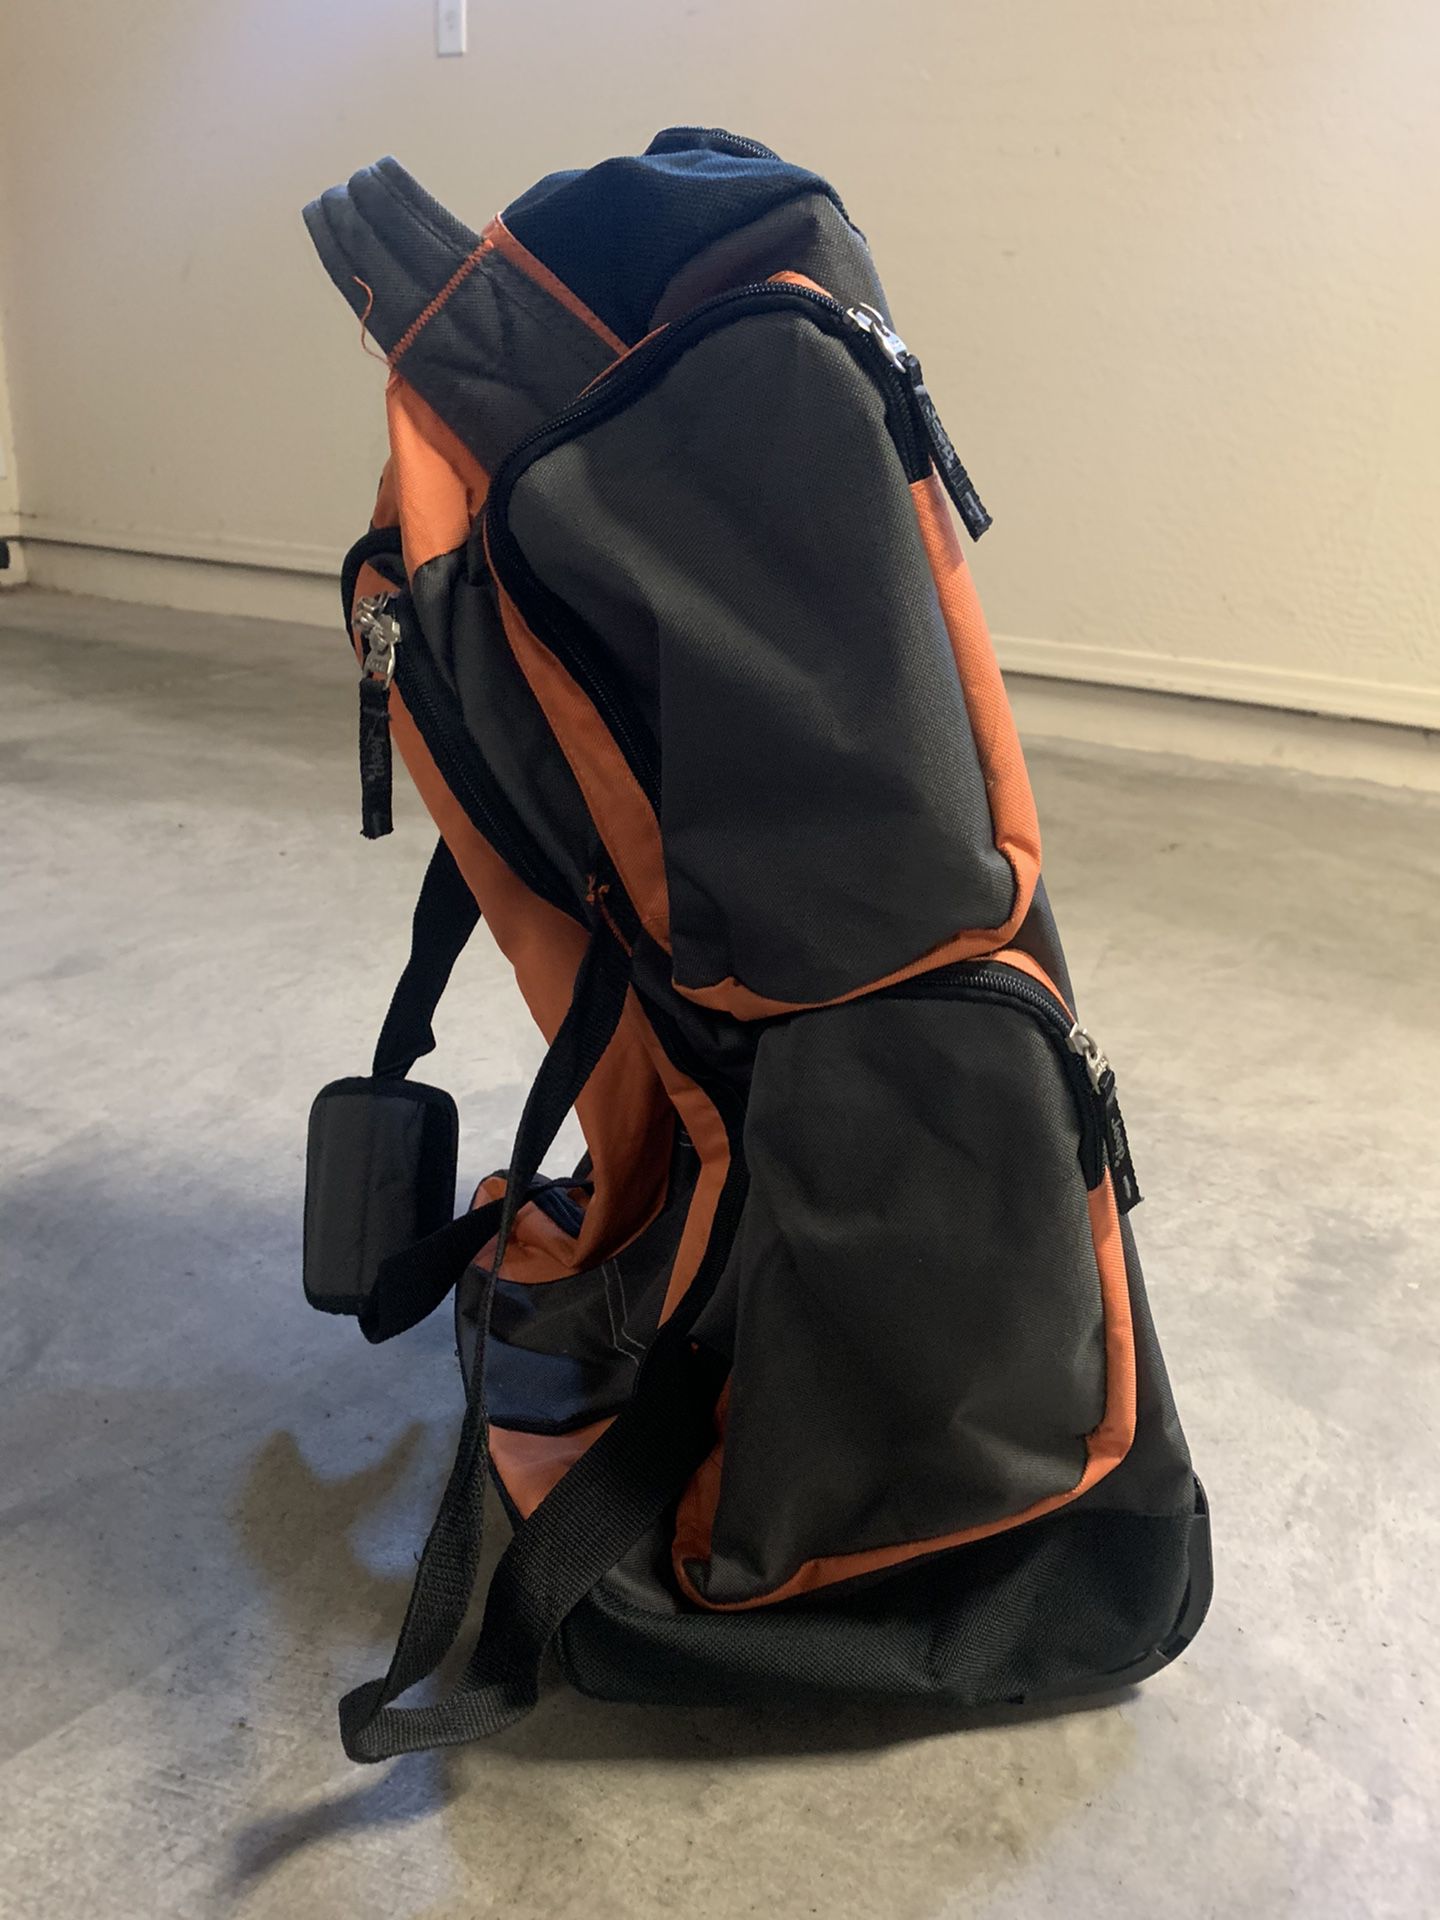 Diamond Boost Wheeled Baseball/Softball Equipment Bag